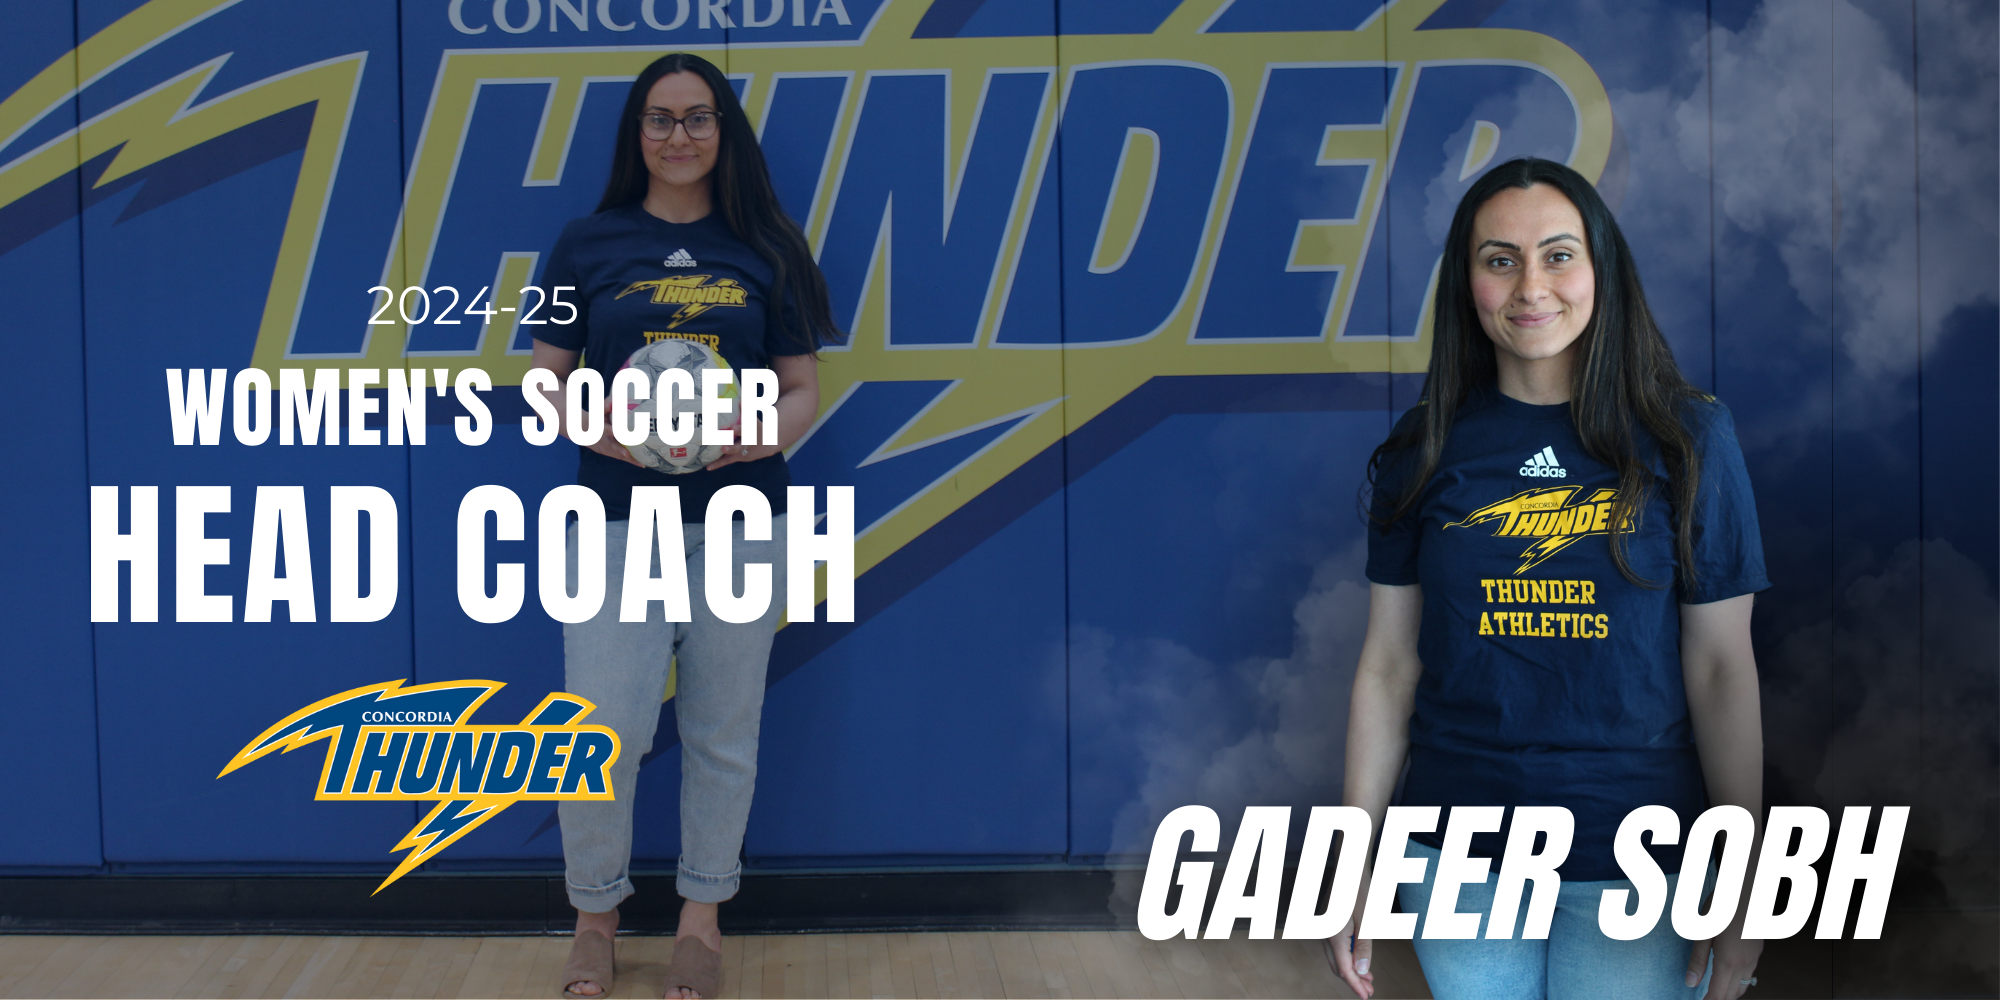 Thunder Name Gadeer Sobh as Women’s Soccer Head Coach